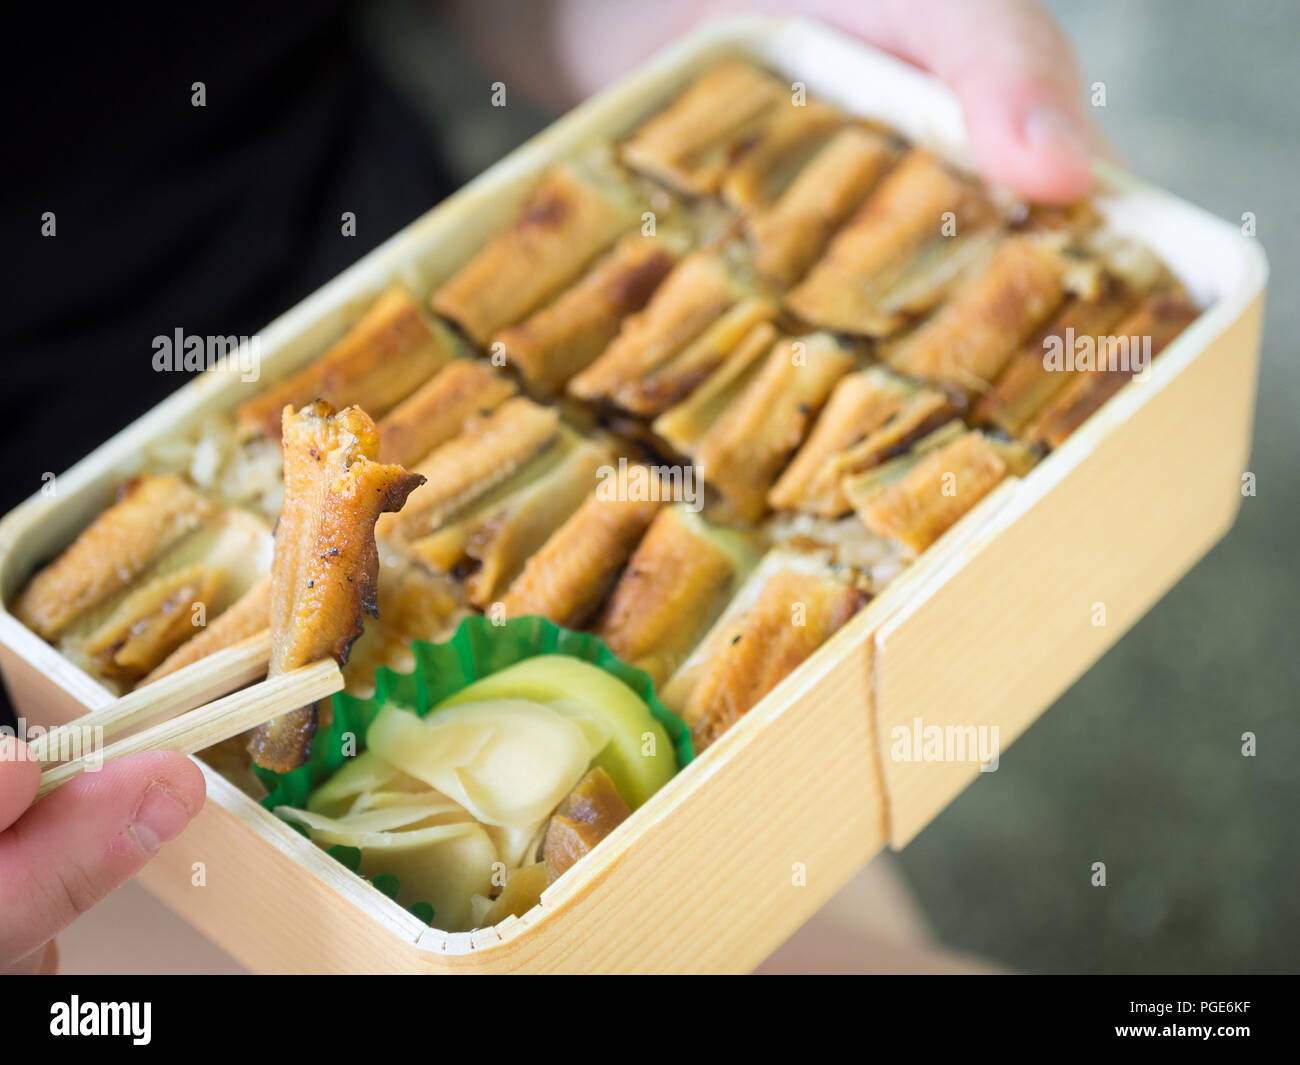 The famous conger eel lunch box (anagomeshi, anago meshi, anago-meshi) from the restaurant Ueno Anagomeshi in Miyajima-guchi, Japan. Stock Photo